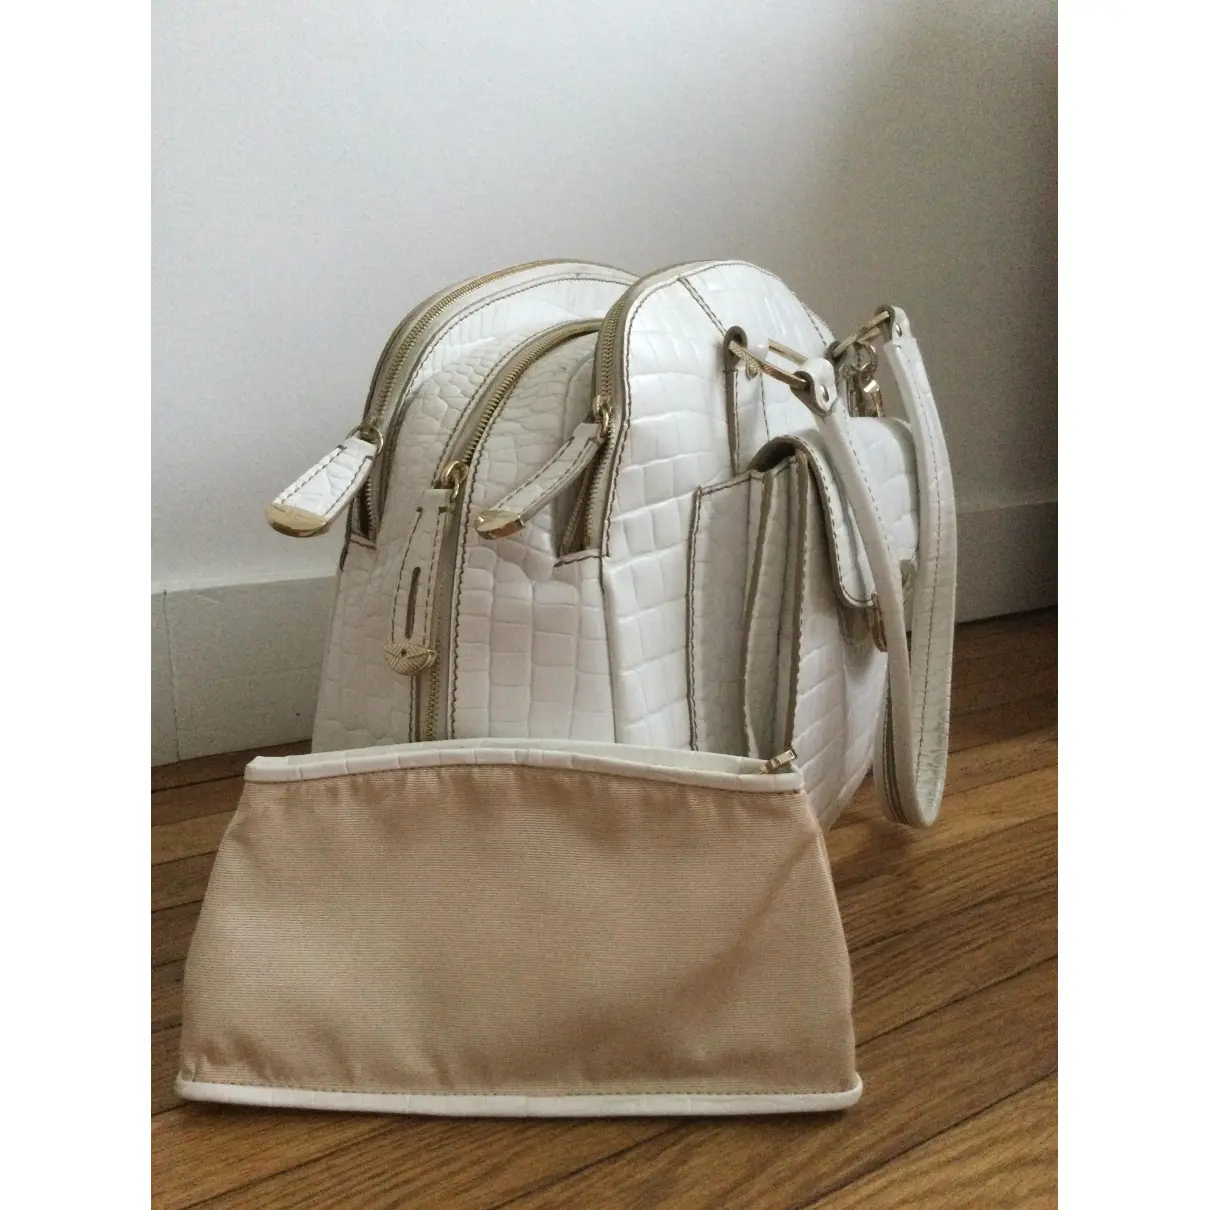 Lancel Adjani leather handbag for sale